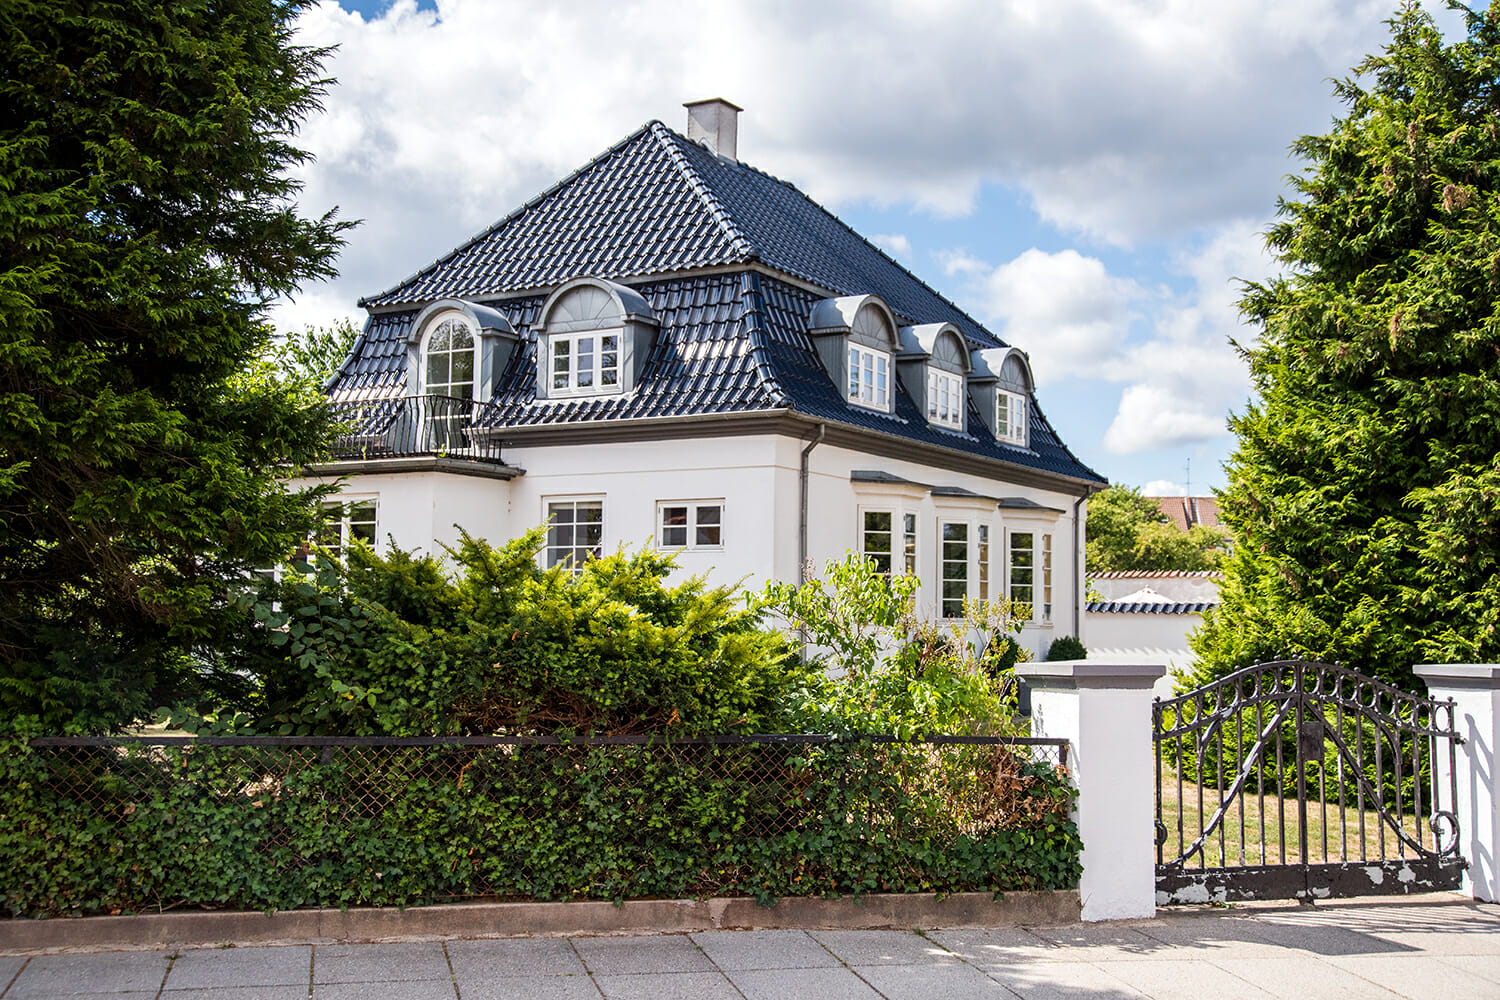 Danish house architecture